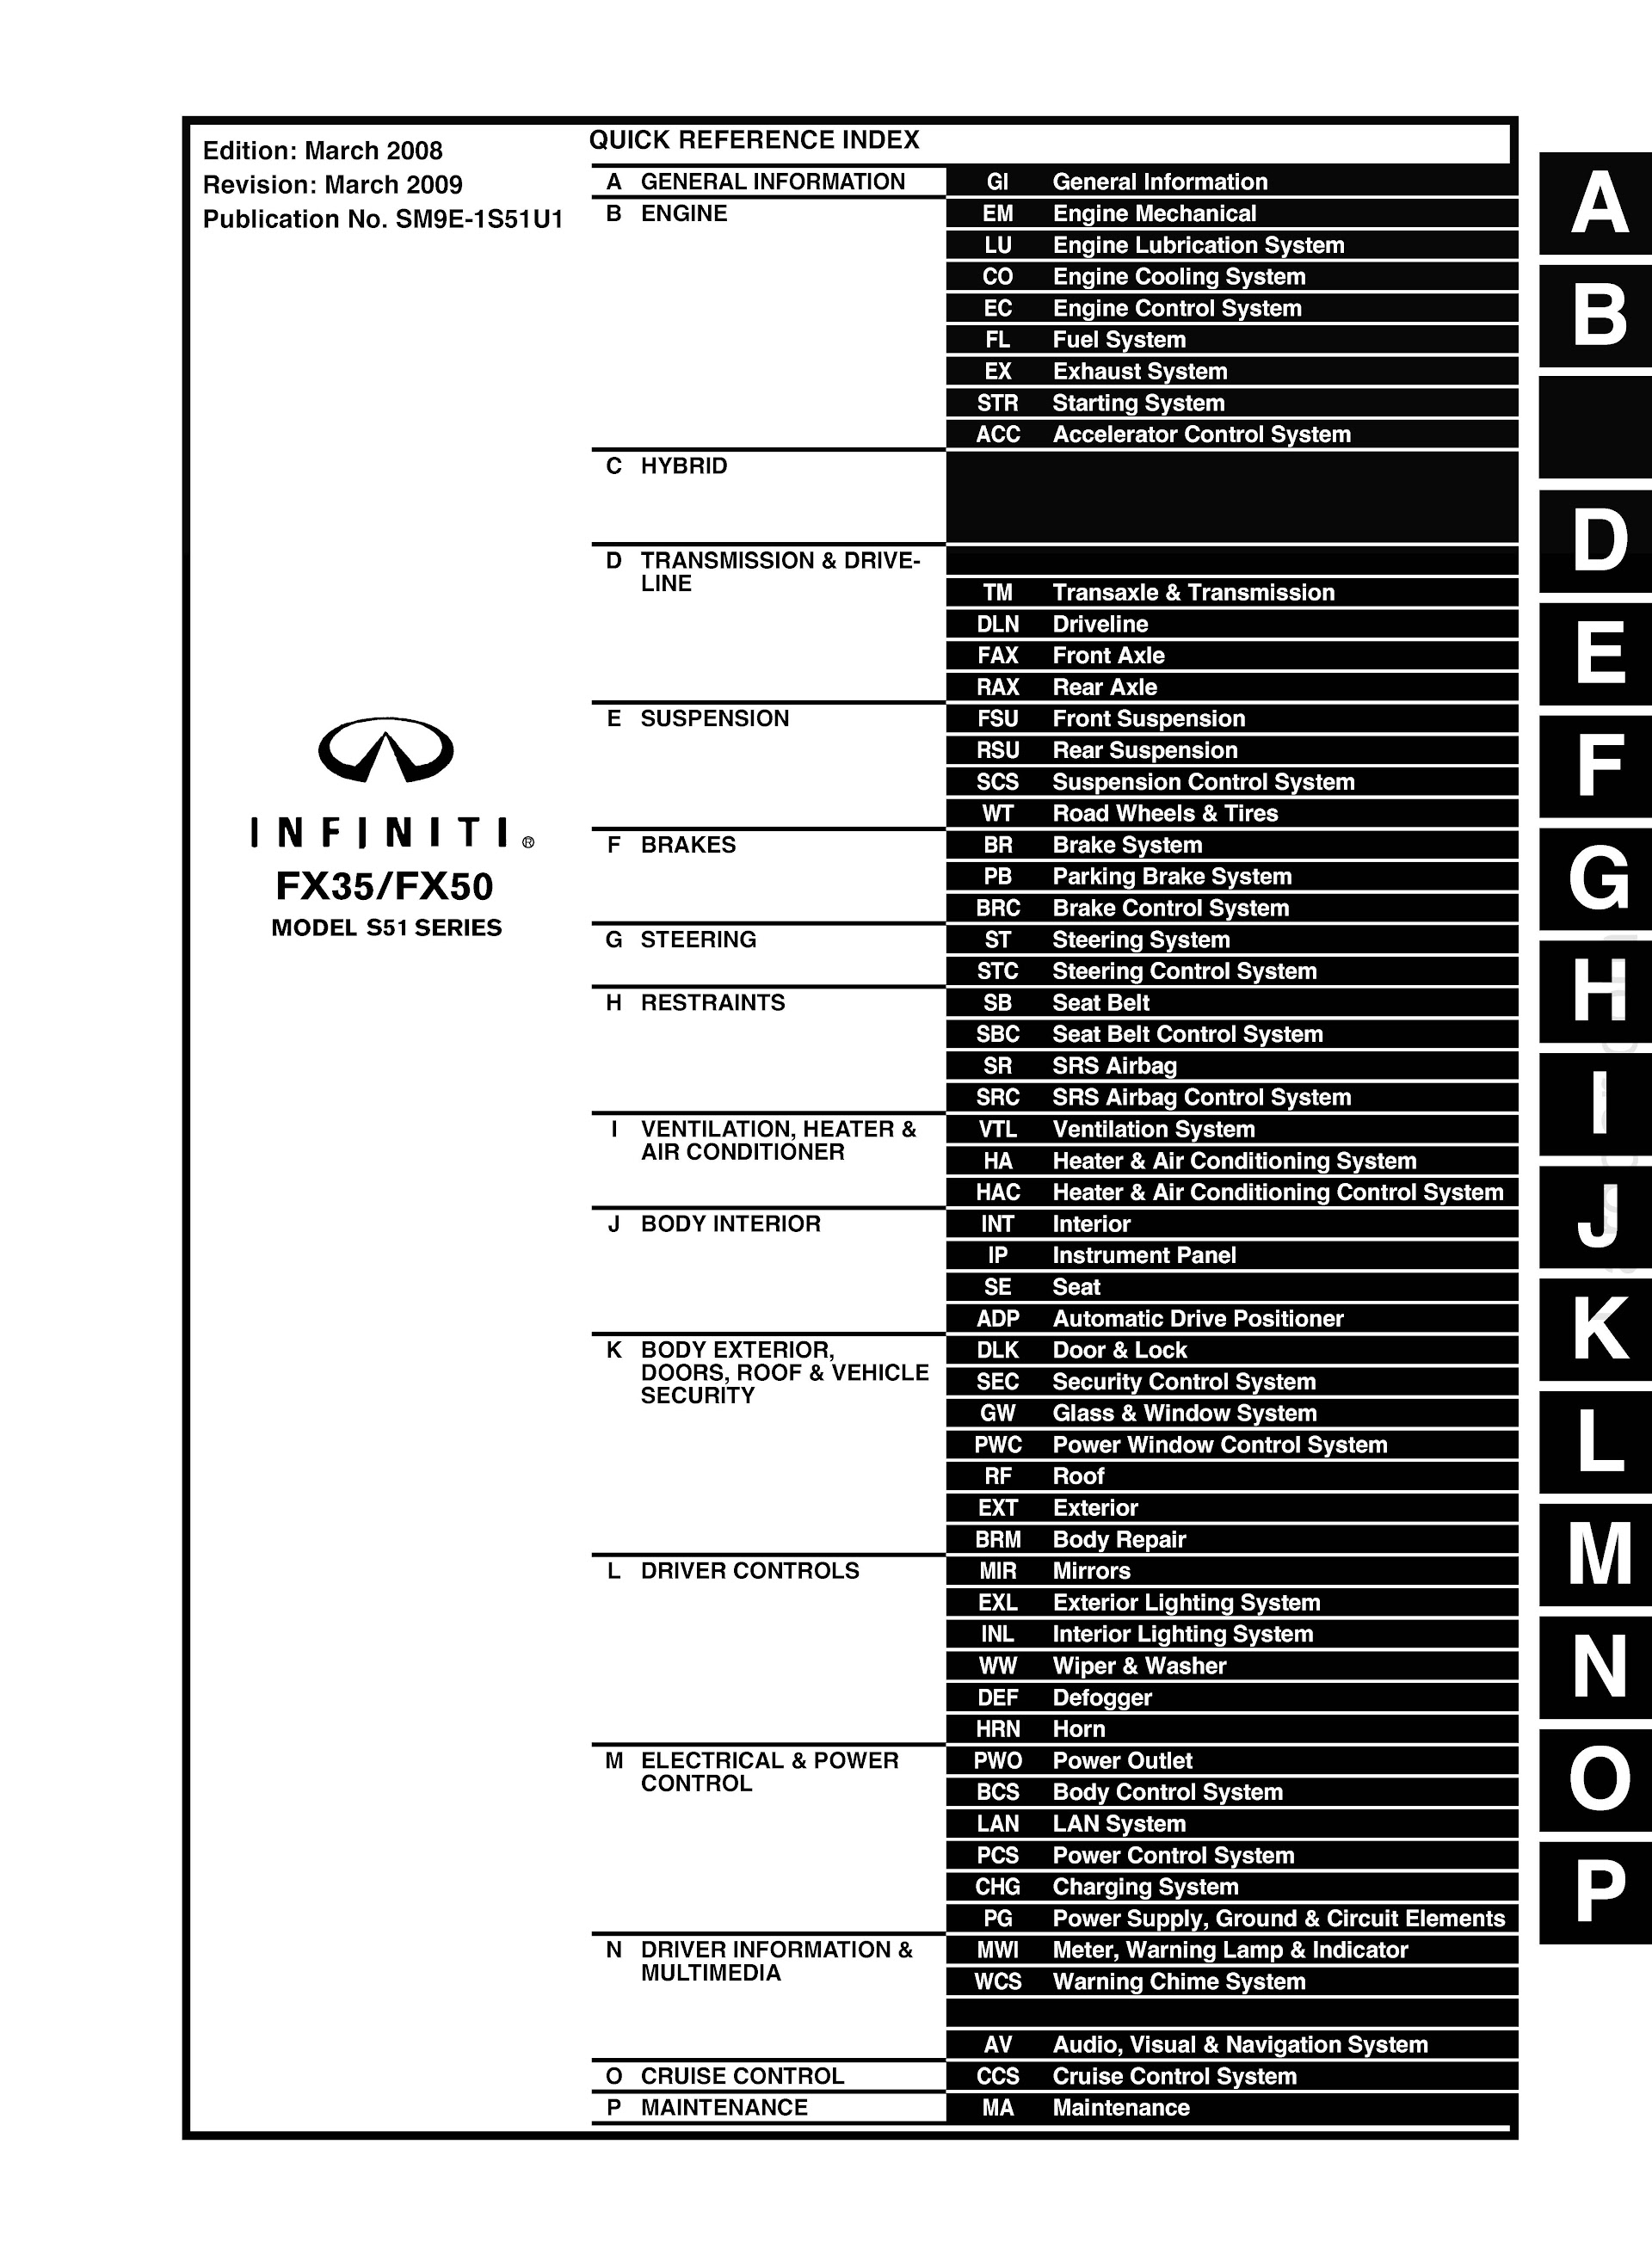 Table of Contents 2008-2009 Infiniti Fx35 and Infiniti FX50 Workshop Repair Manual